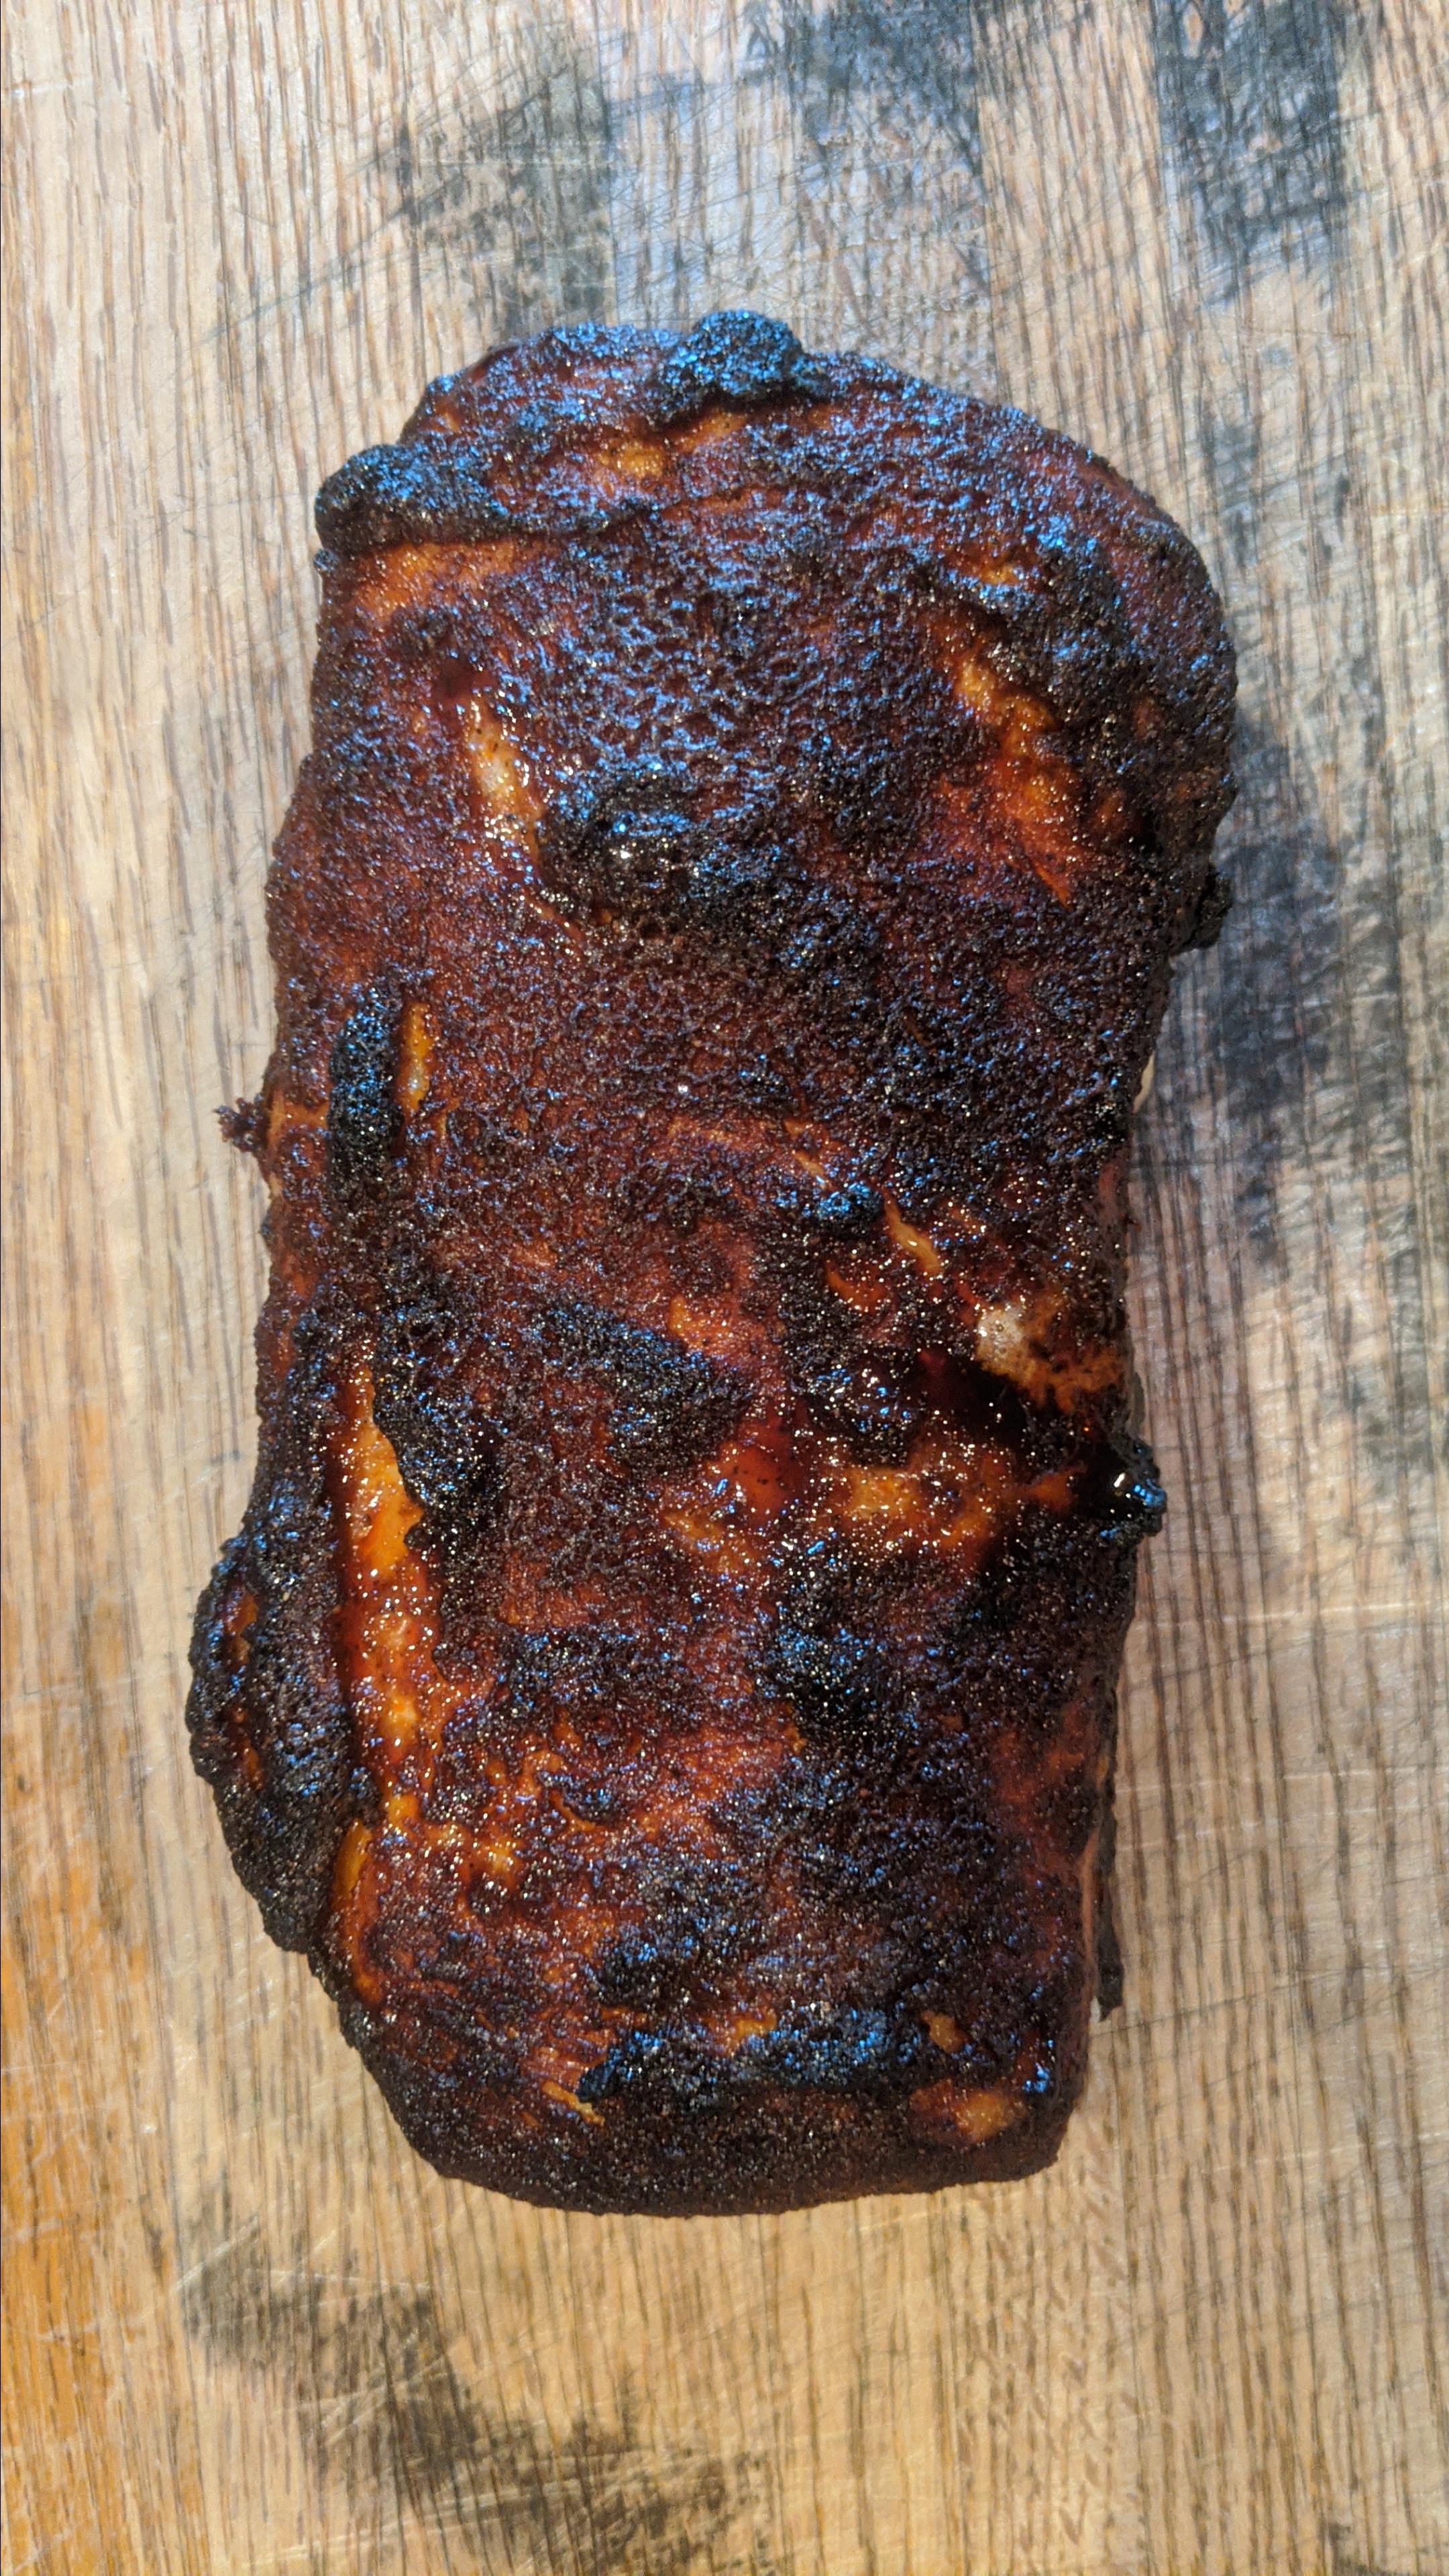 Air Fryer Dry-Rubbed Pork Tenderloin with Broccoli KSmith